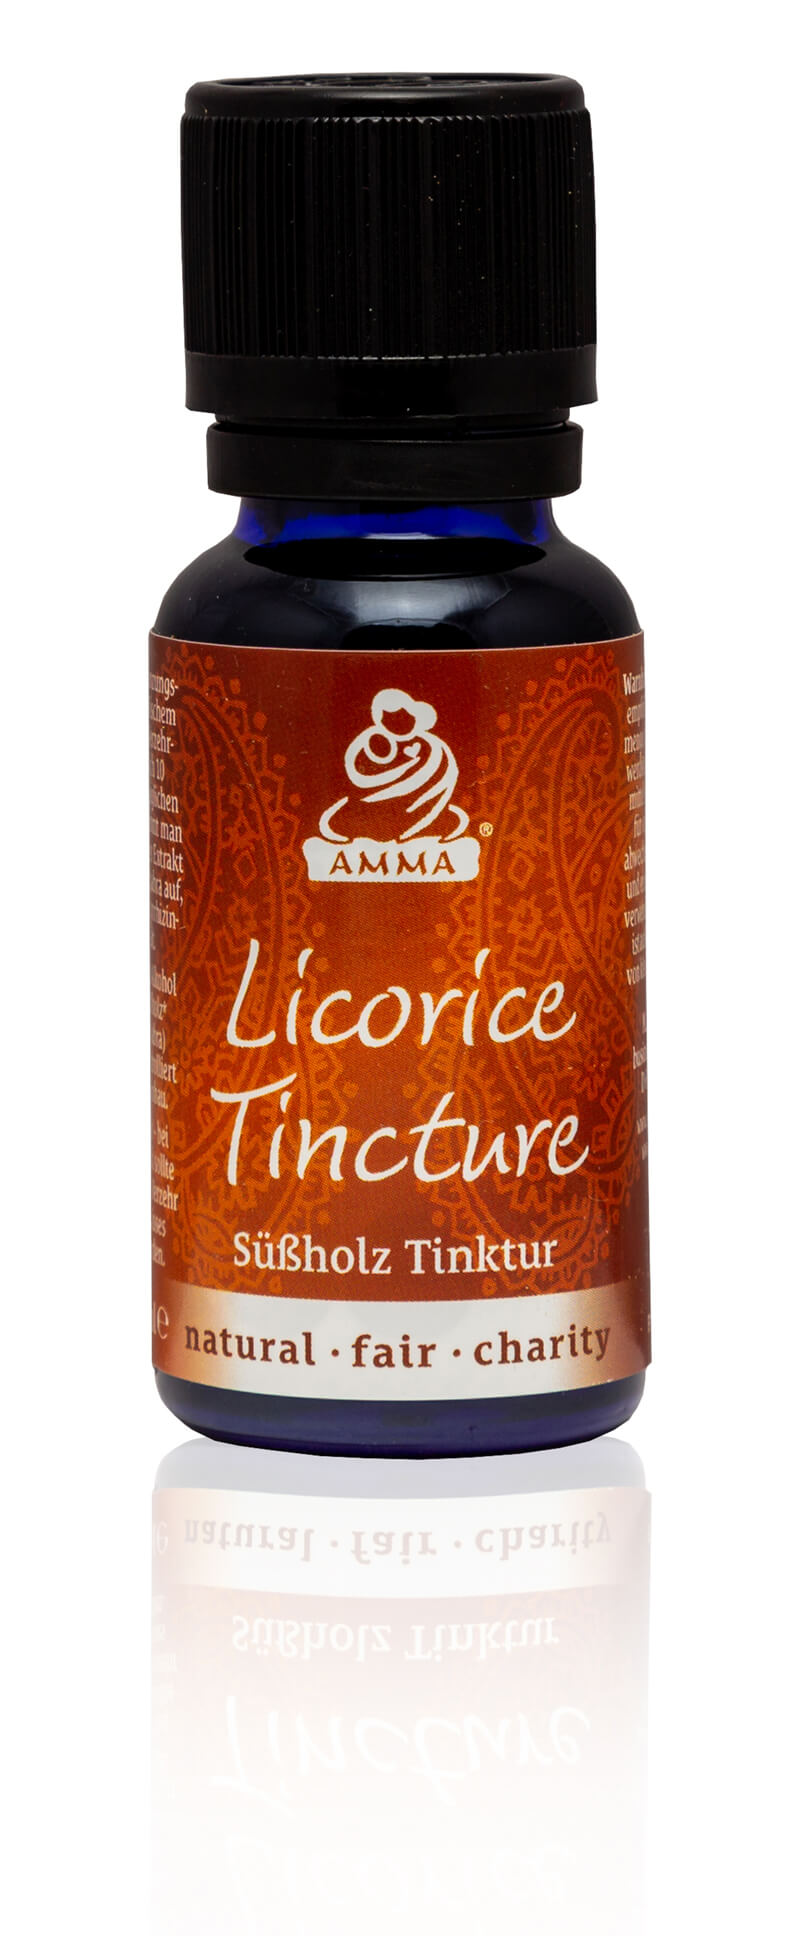 Licorice Tincture, organic